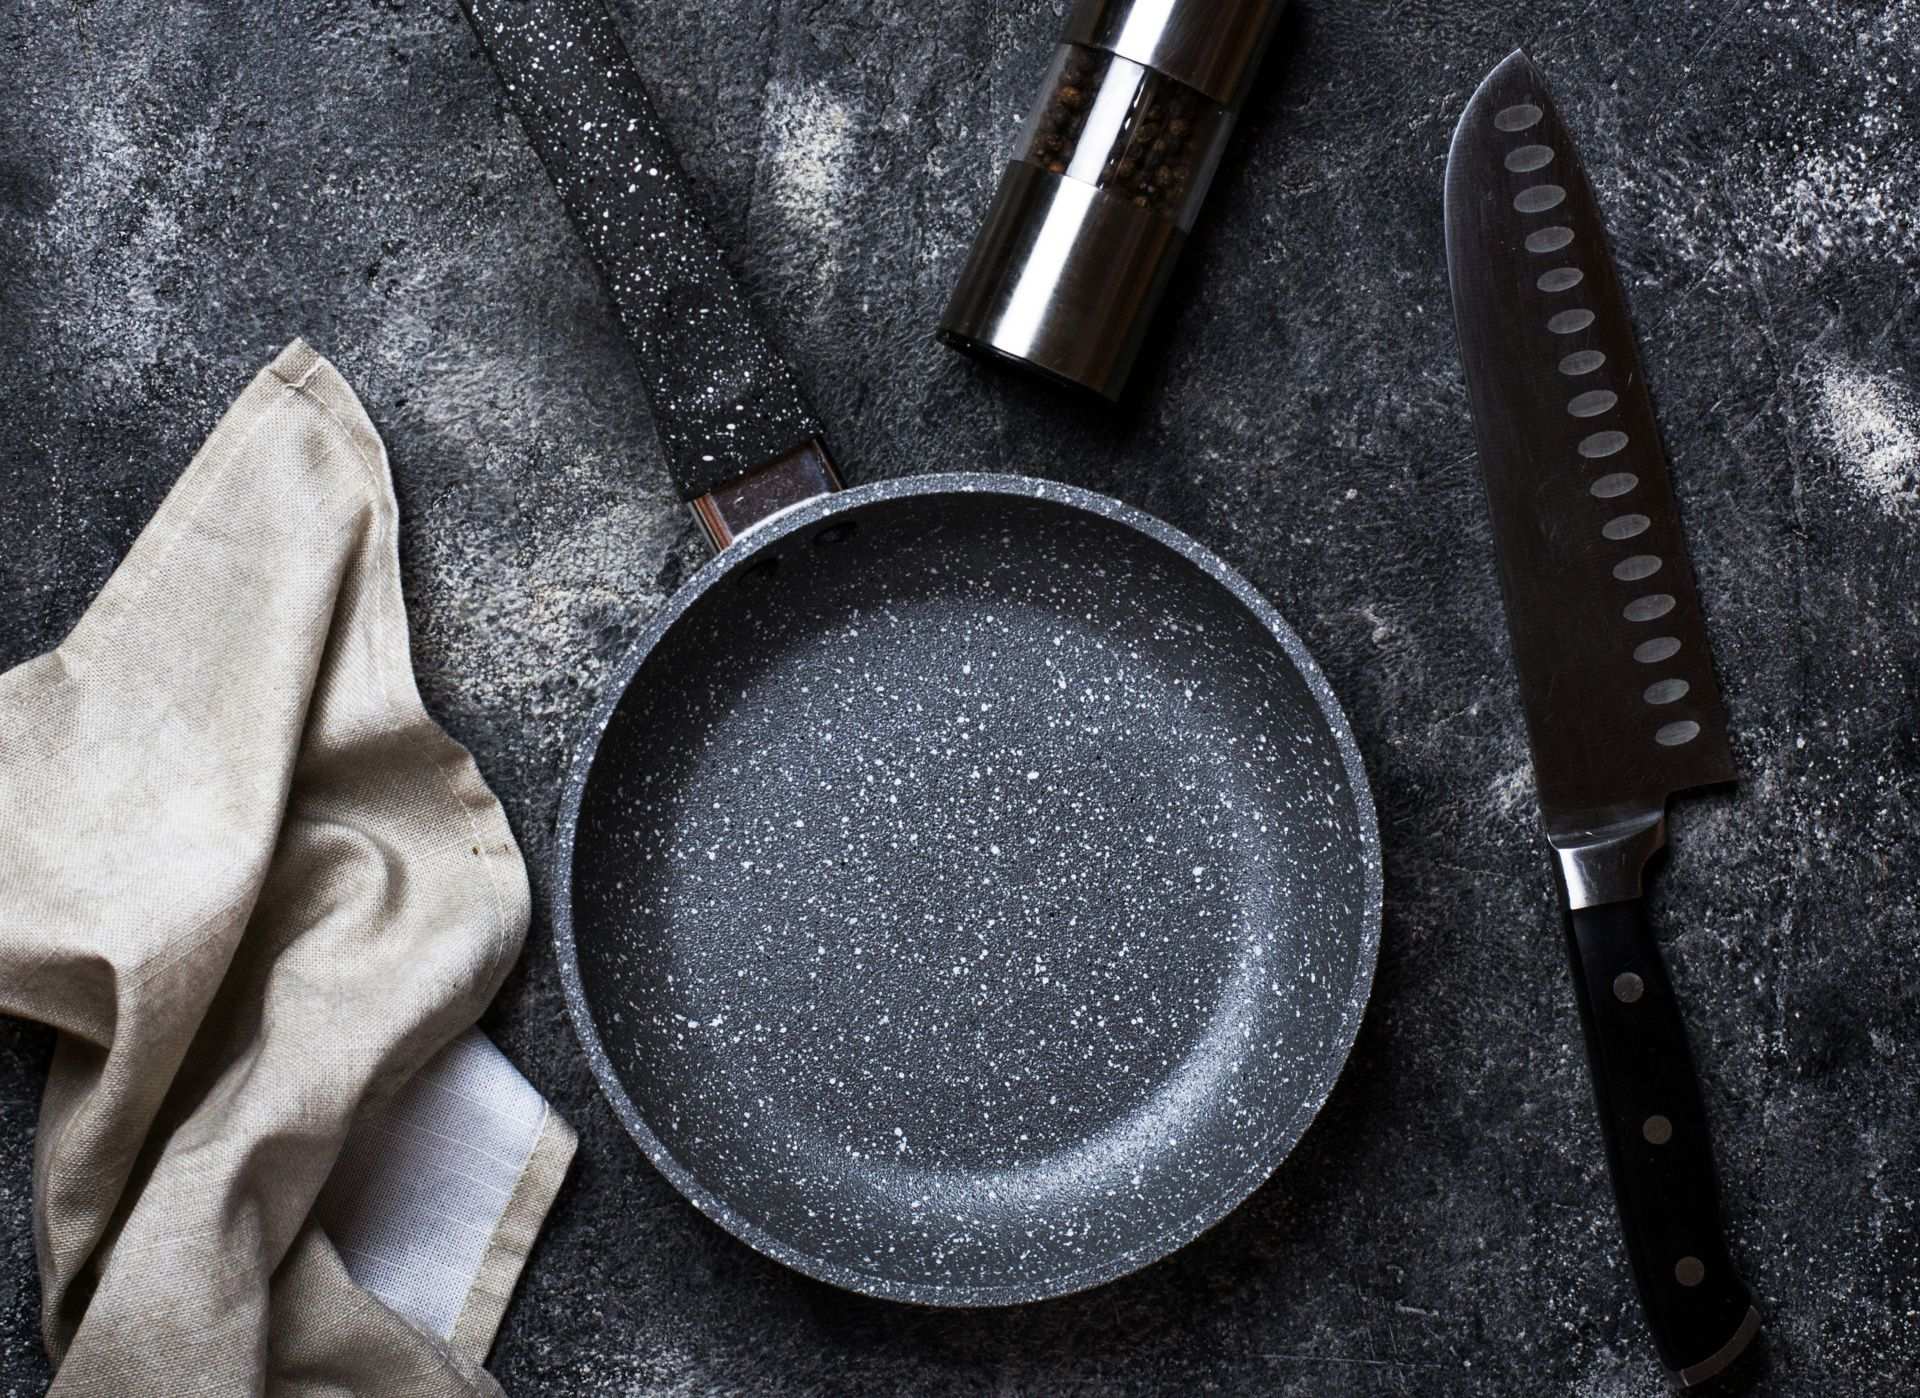 Frying pan and sharp knife on granite worktop